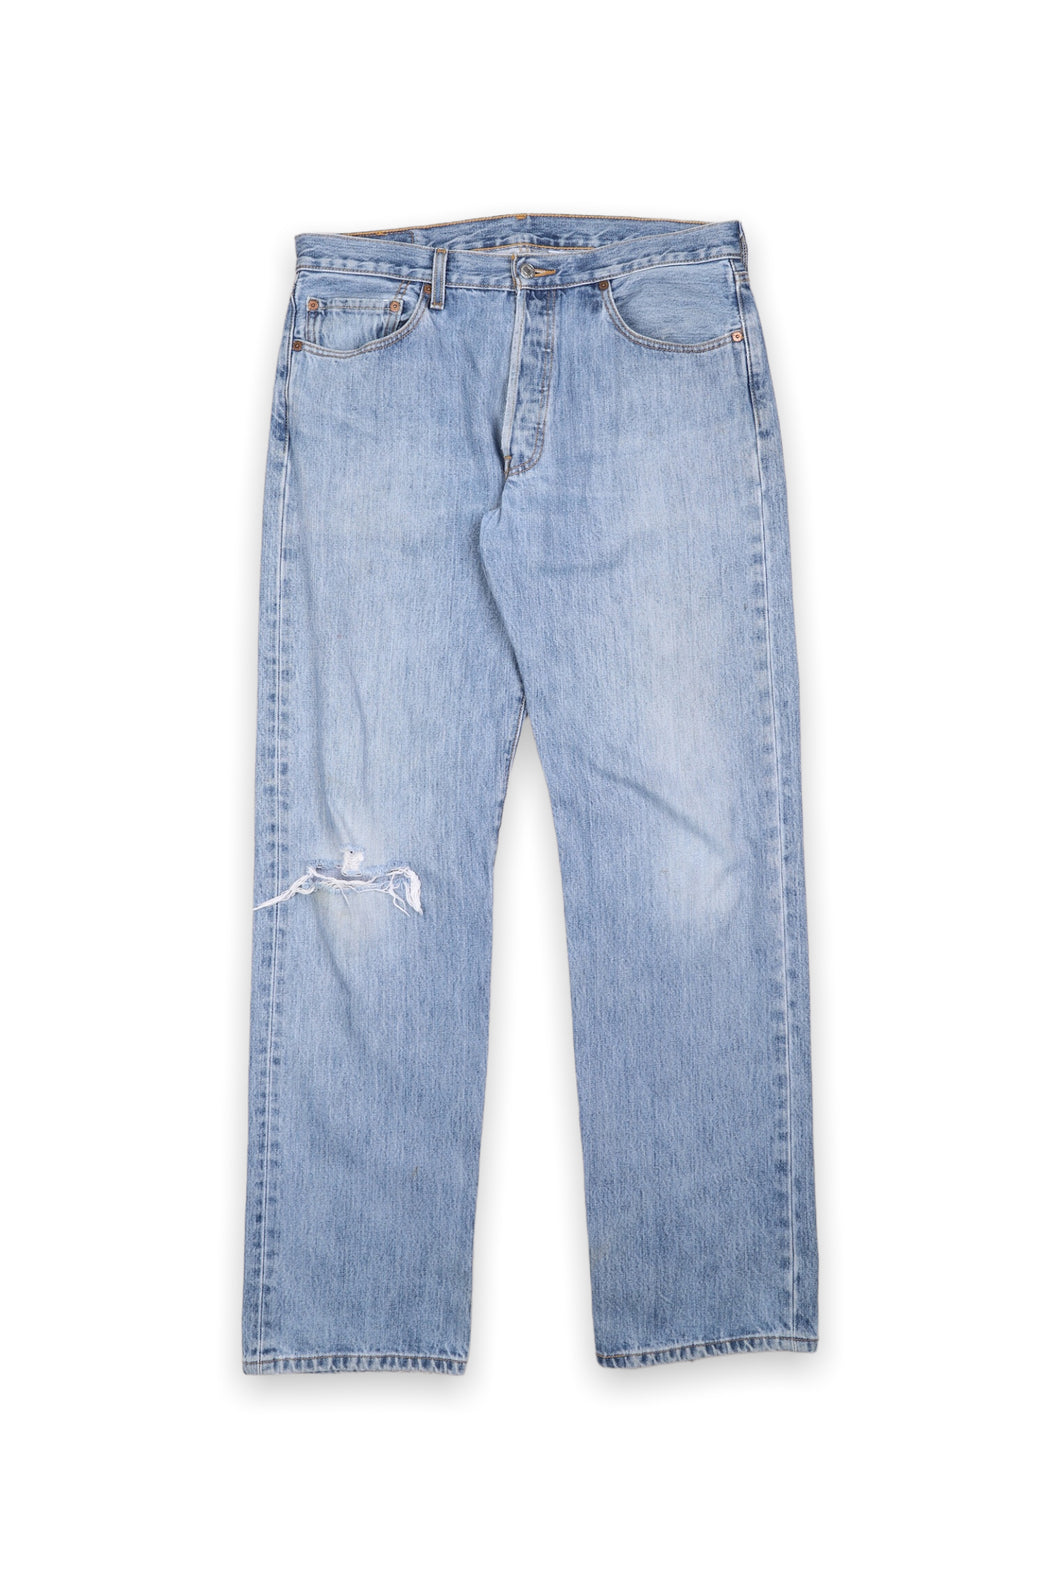 Levi's 501 distressed blue straight leg jeans